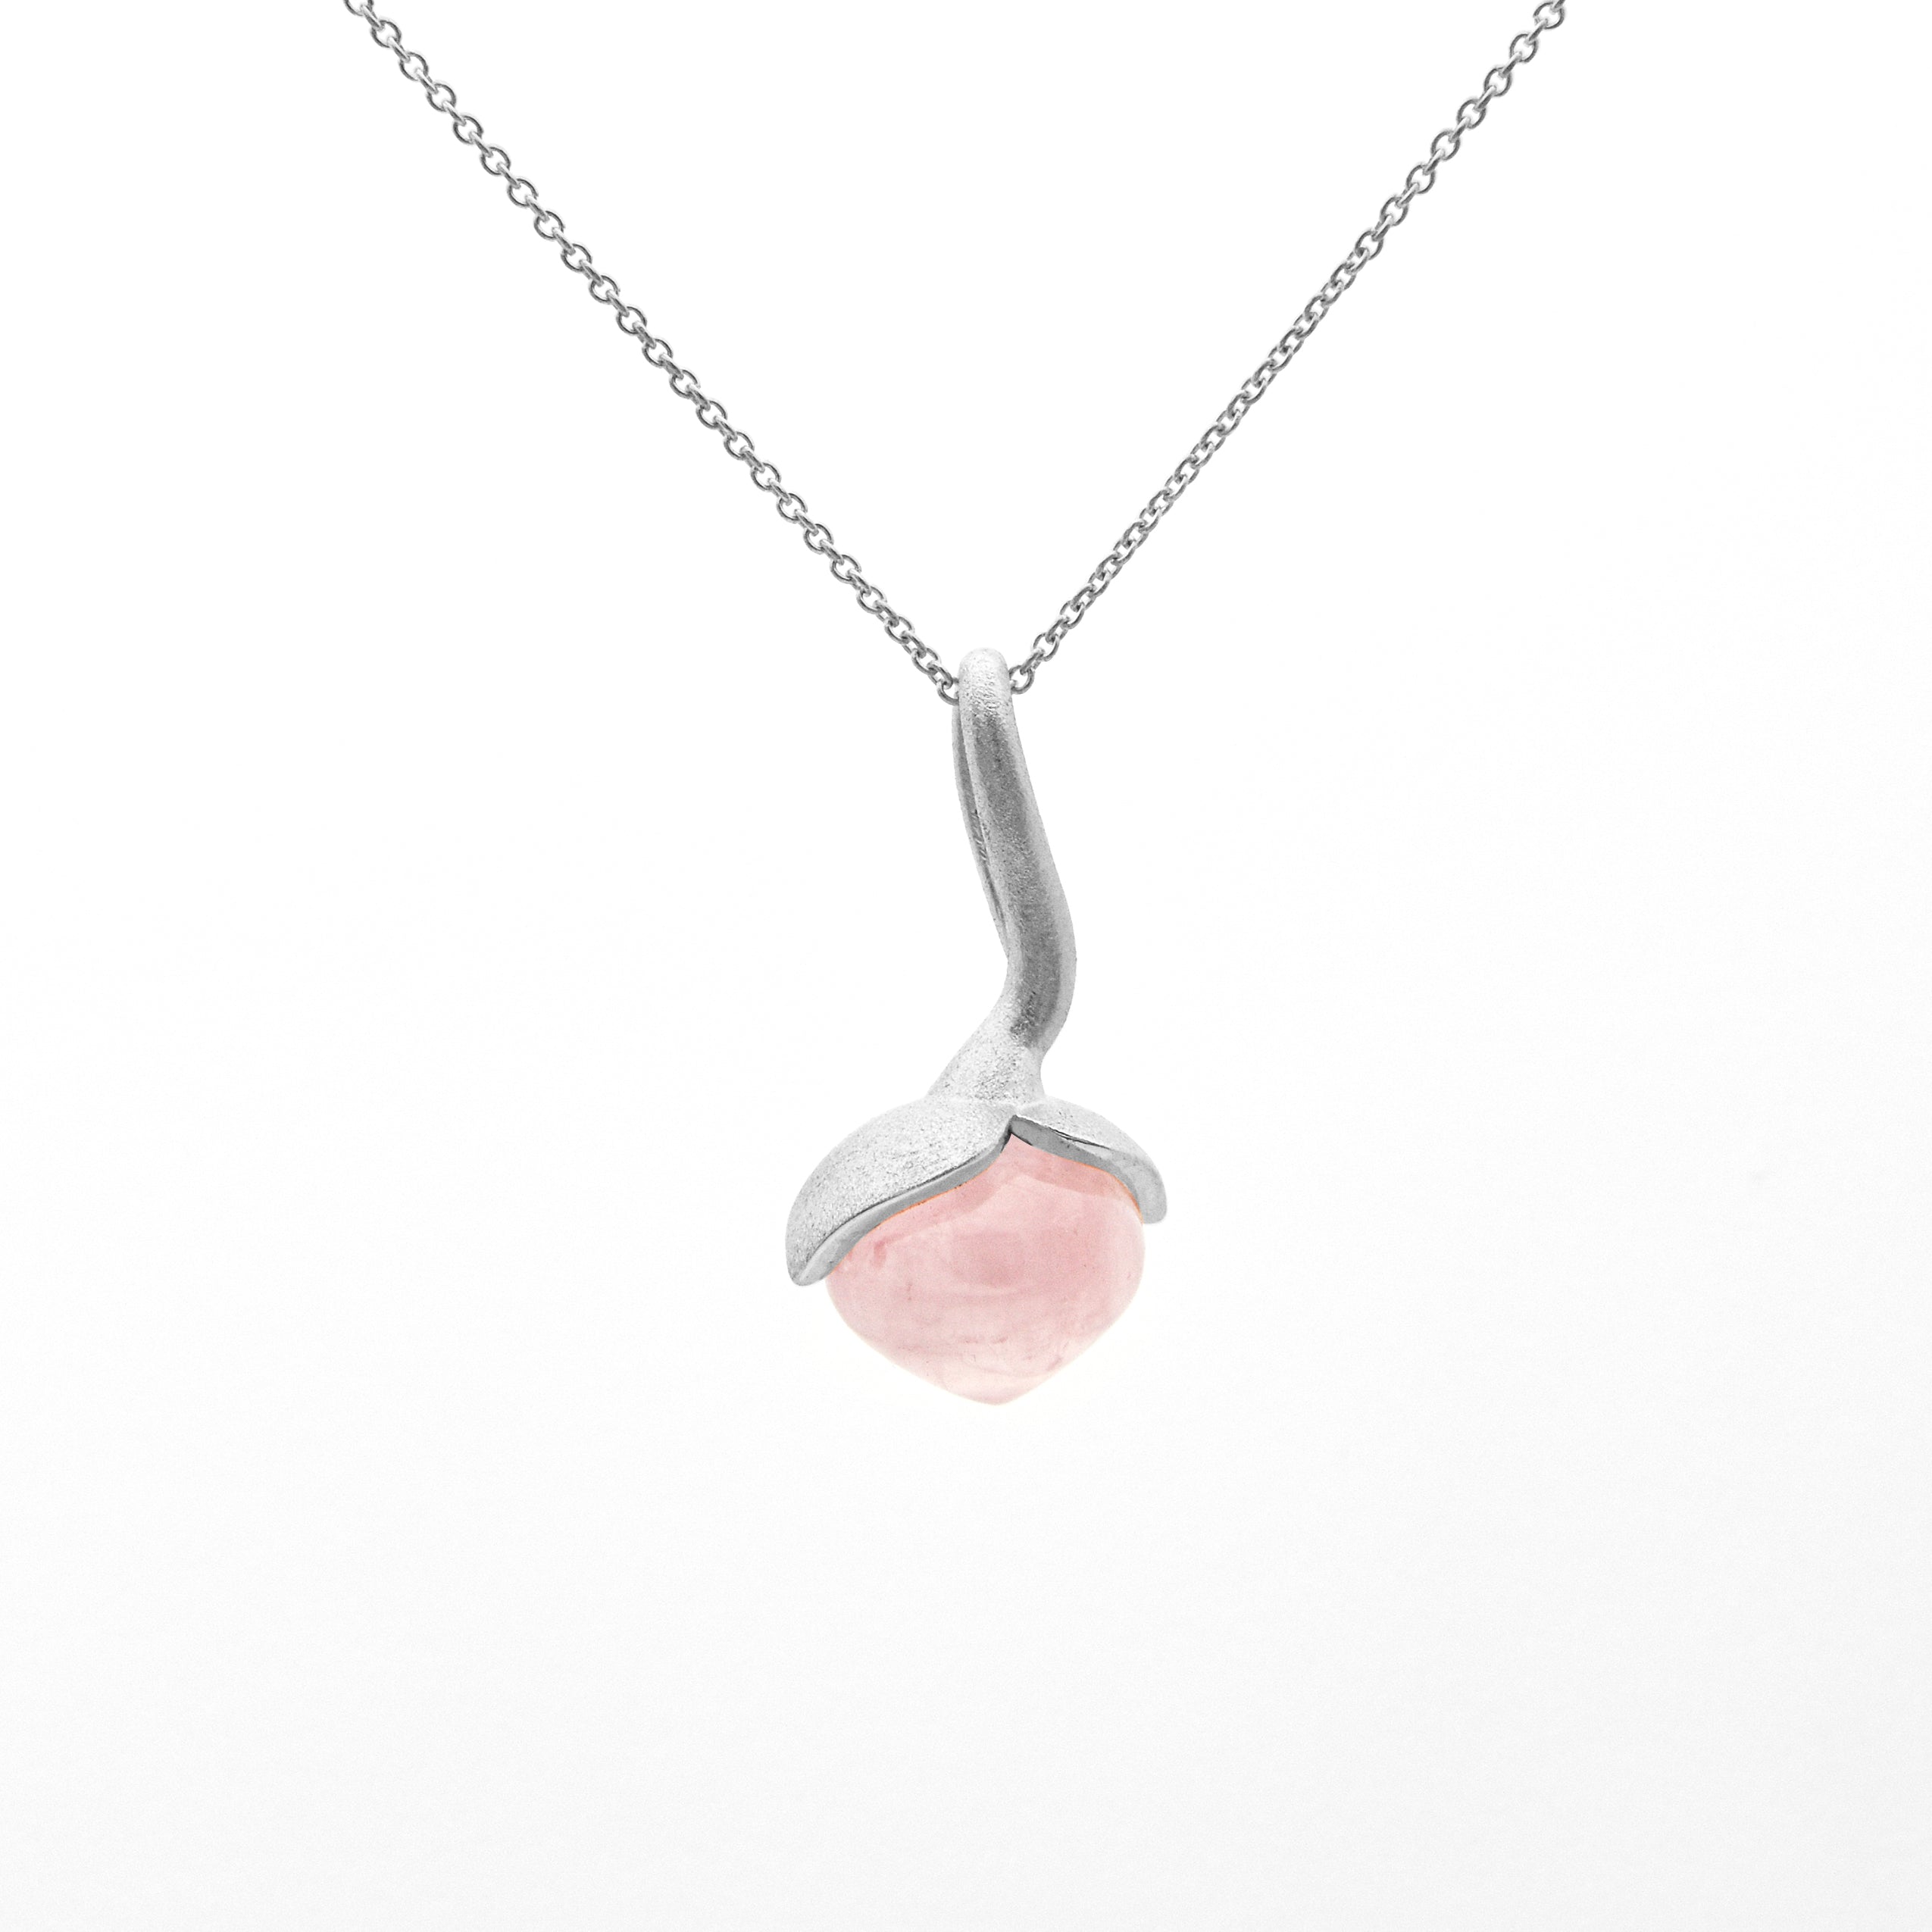 Dolce pendant "big" with rose quartz 925/-